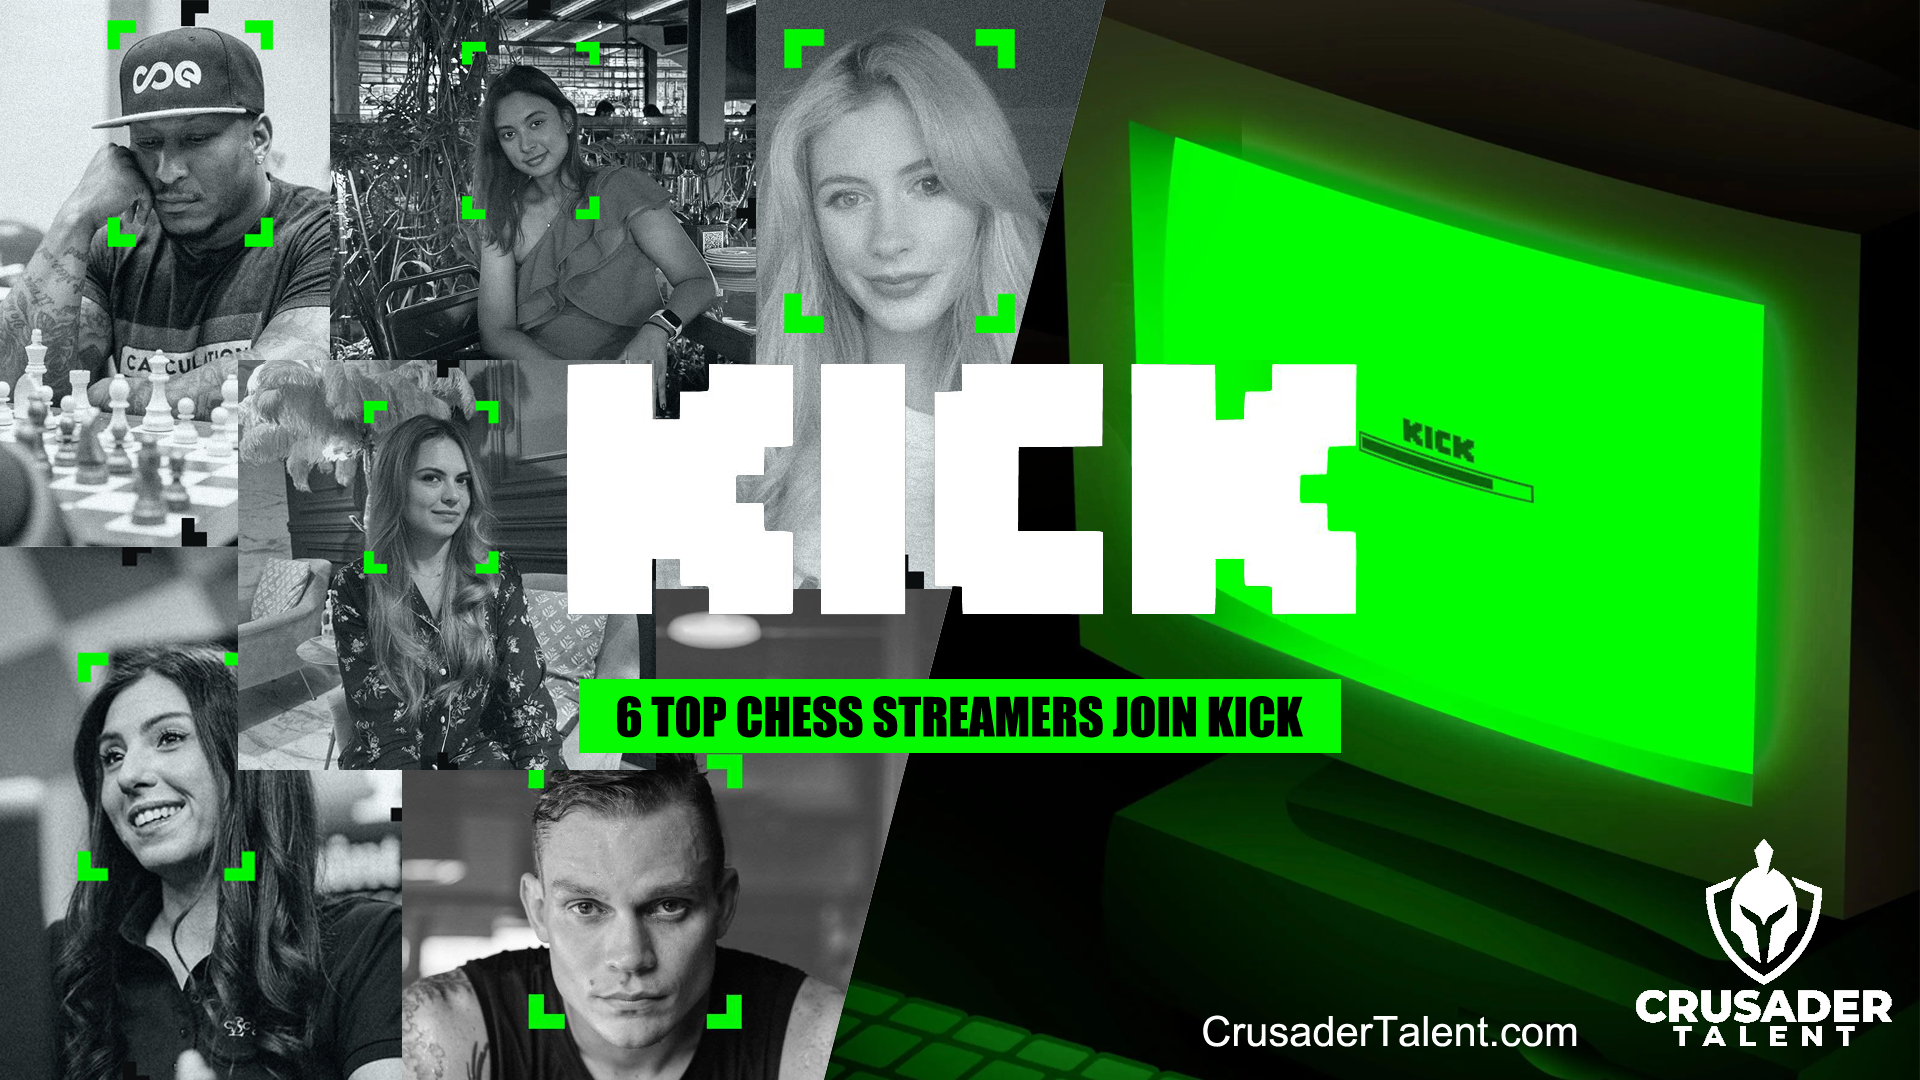 Crusader Talent Announces Landmark Partnership with Kick.com for Chess Content Creators